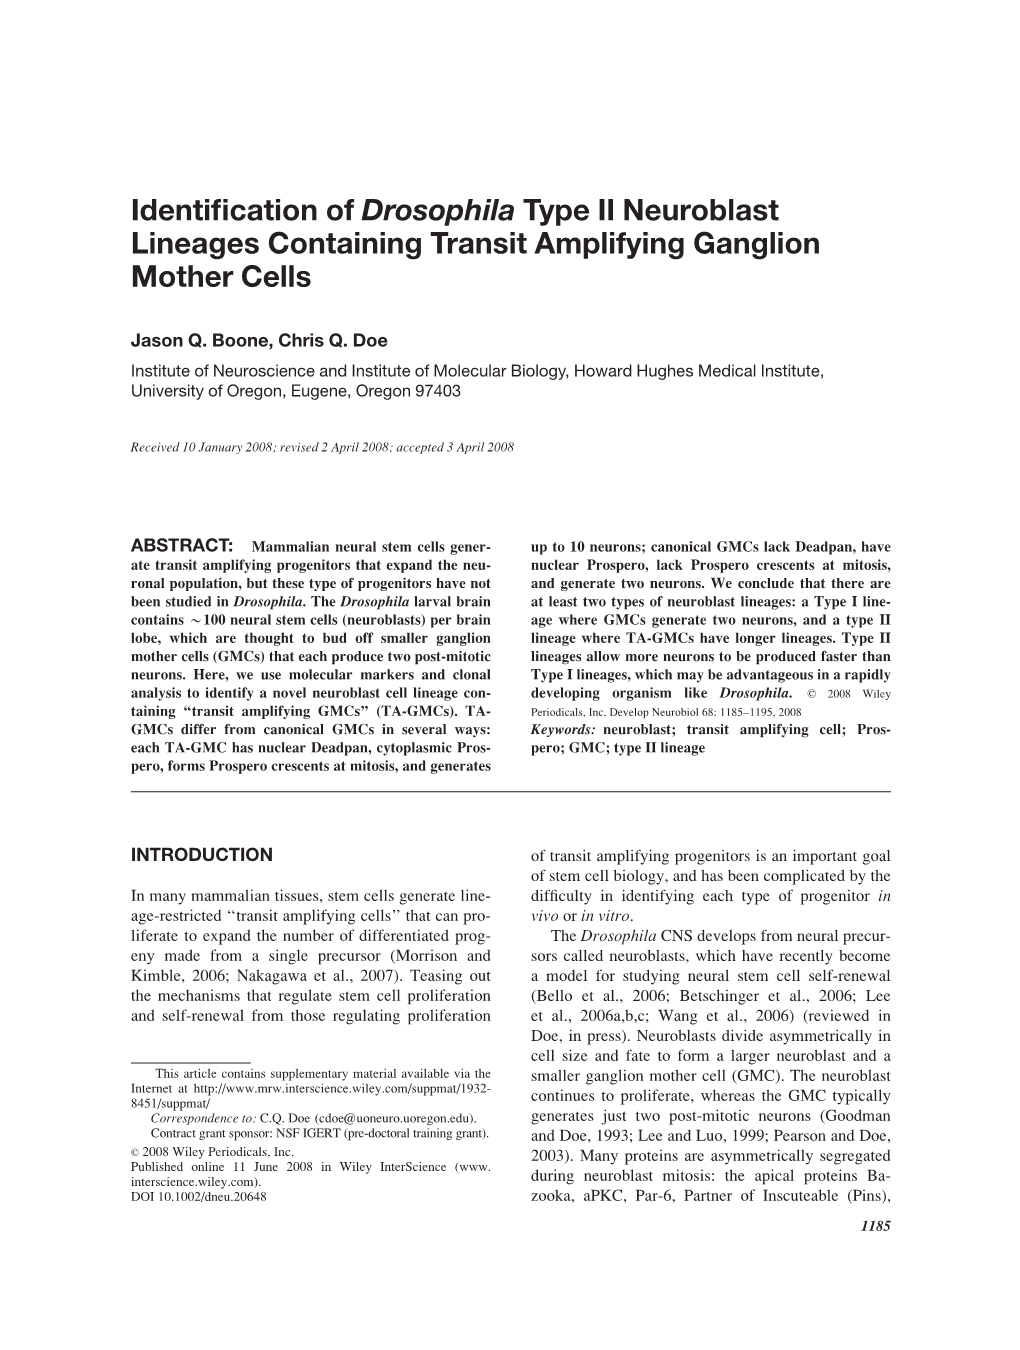 Identification of Drosophila Type II Neuroblast Lineages Containing